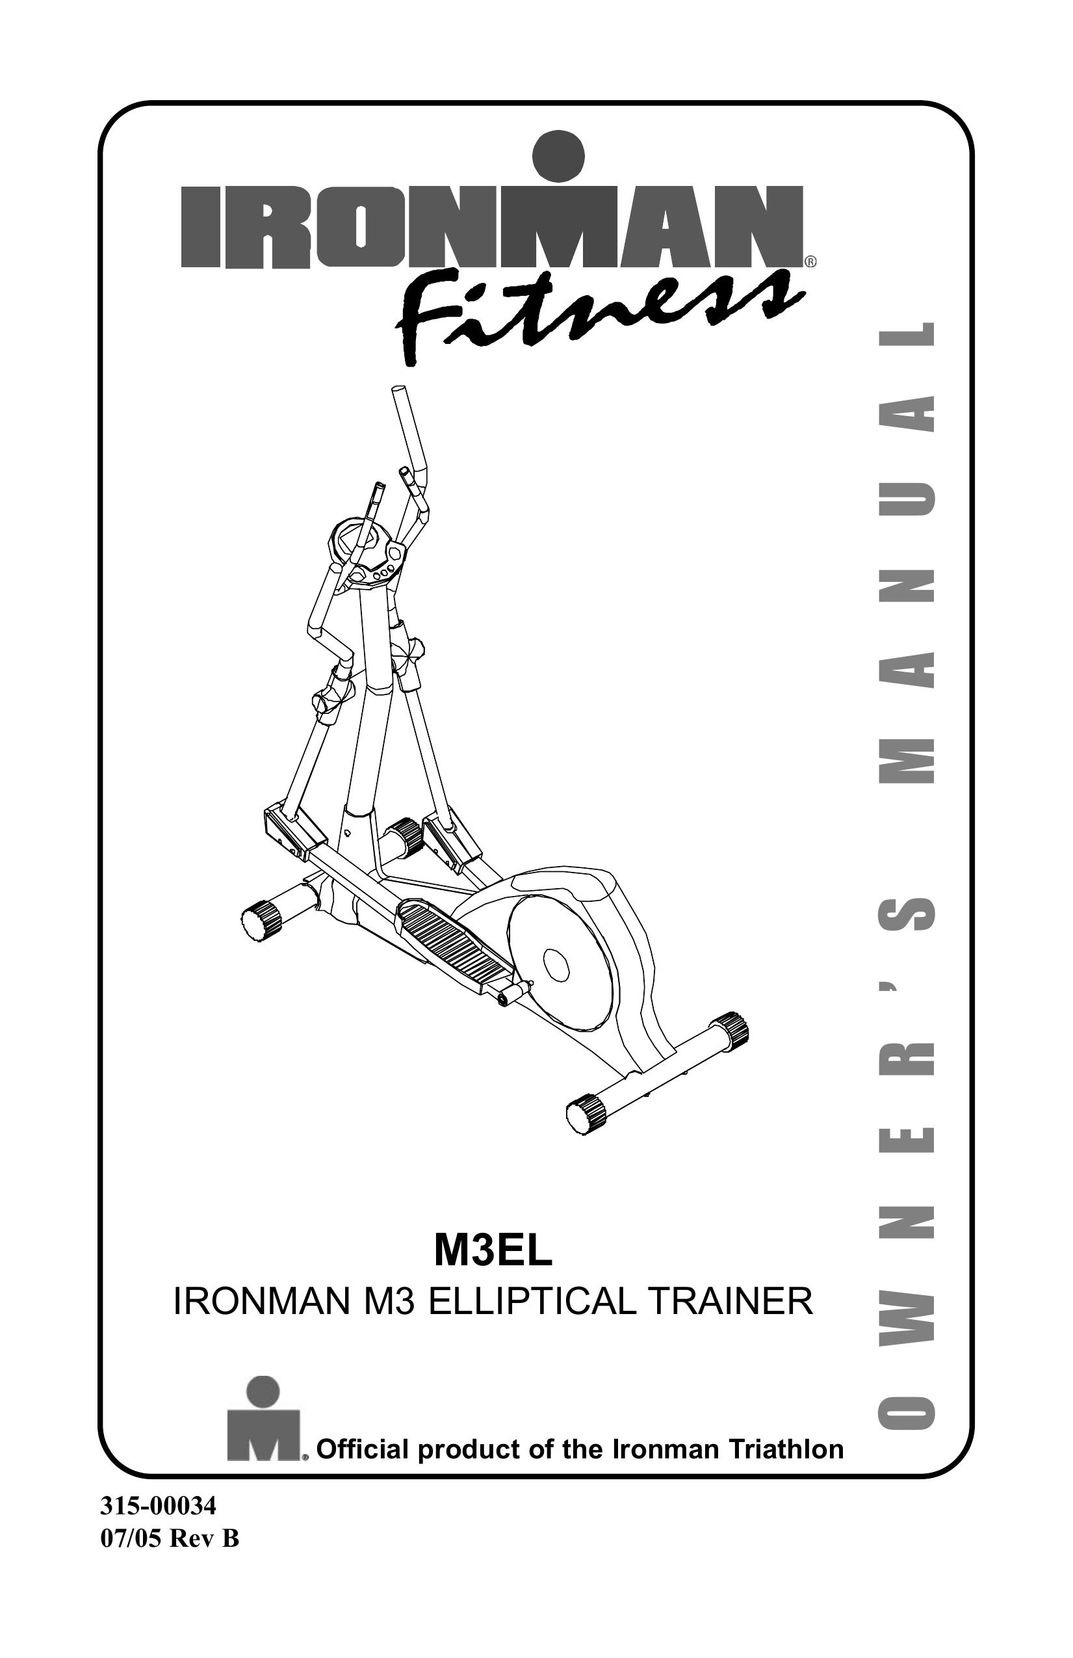 Ironman Fitness M3EL Elliptical Trainer User Manual